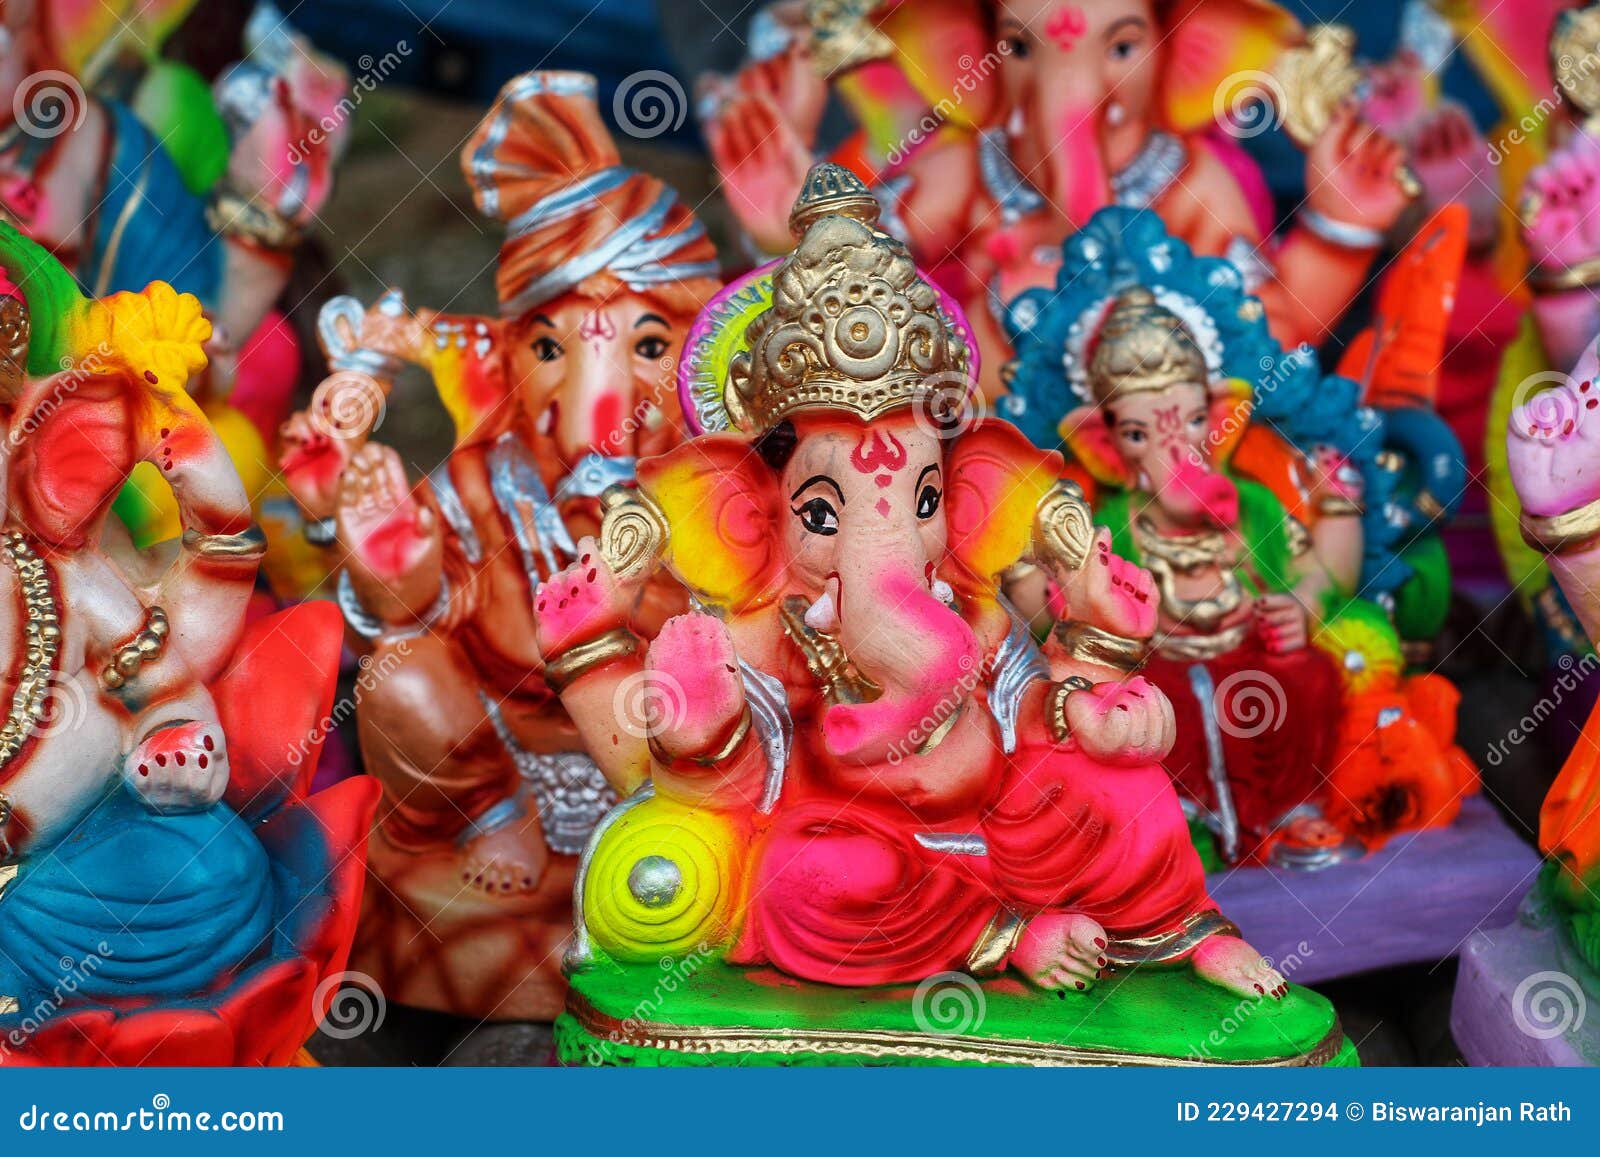 Varieties of Lord Ganesh Idol Arranged Beautifully for Celebration ...